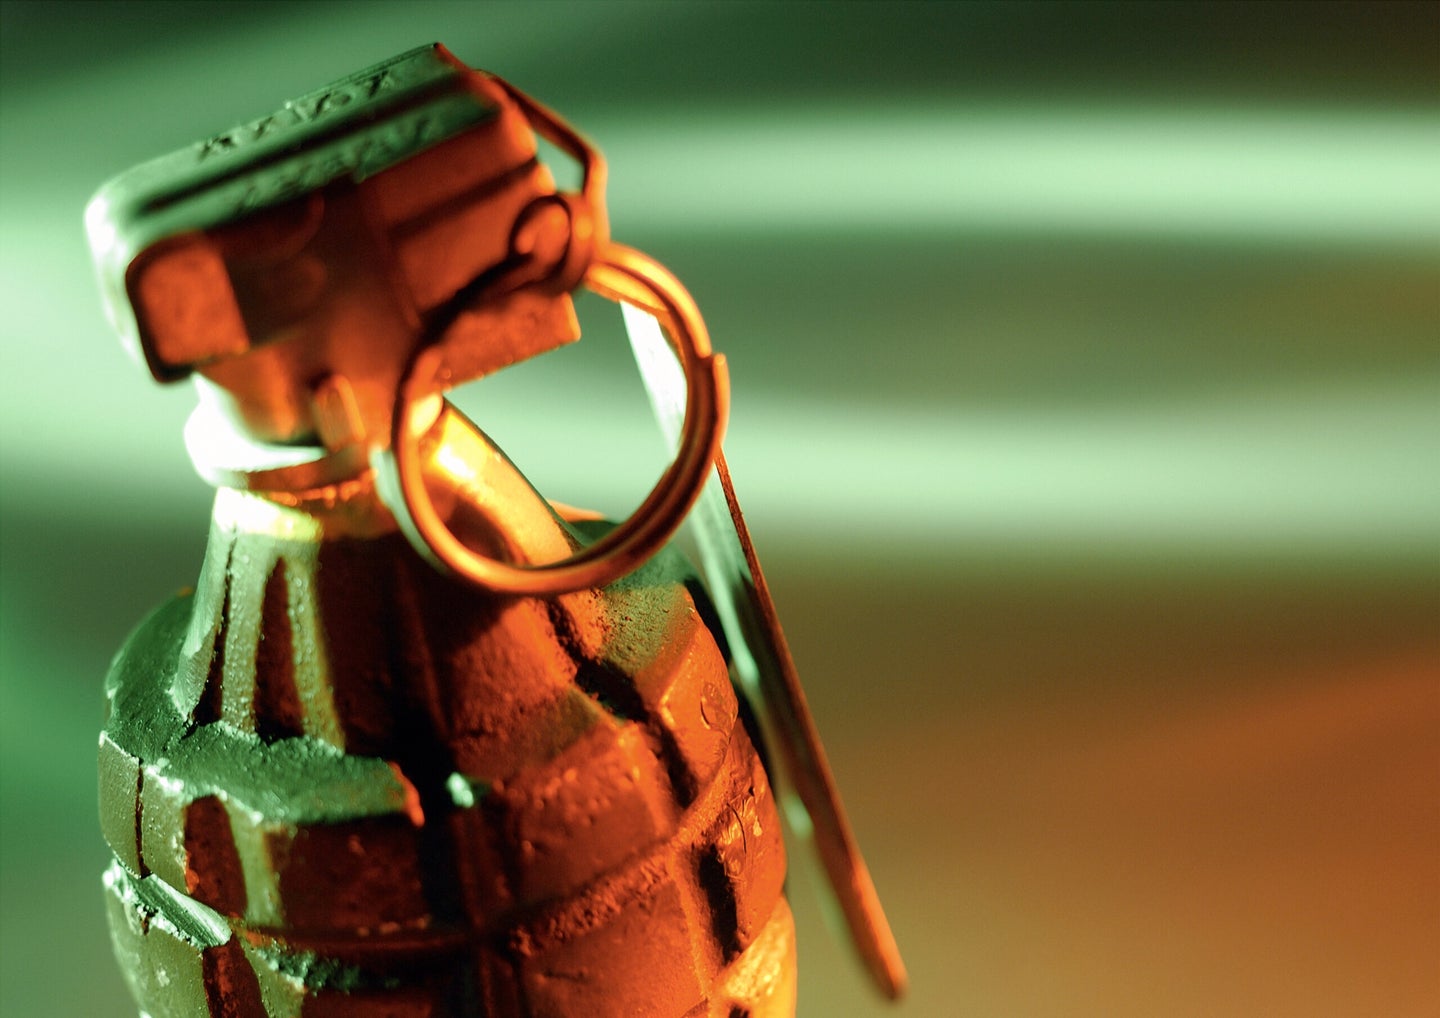 Hand grenade, close-up.